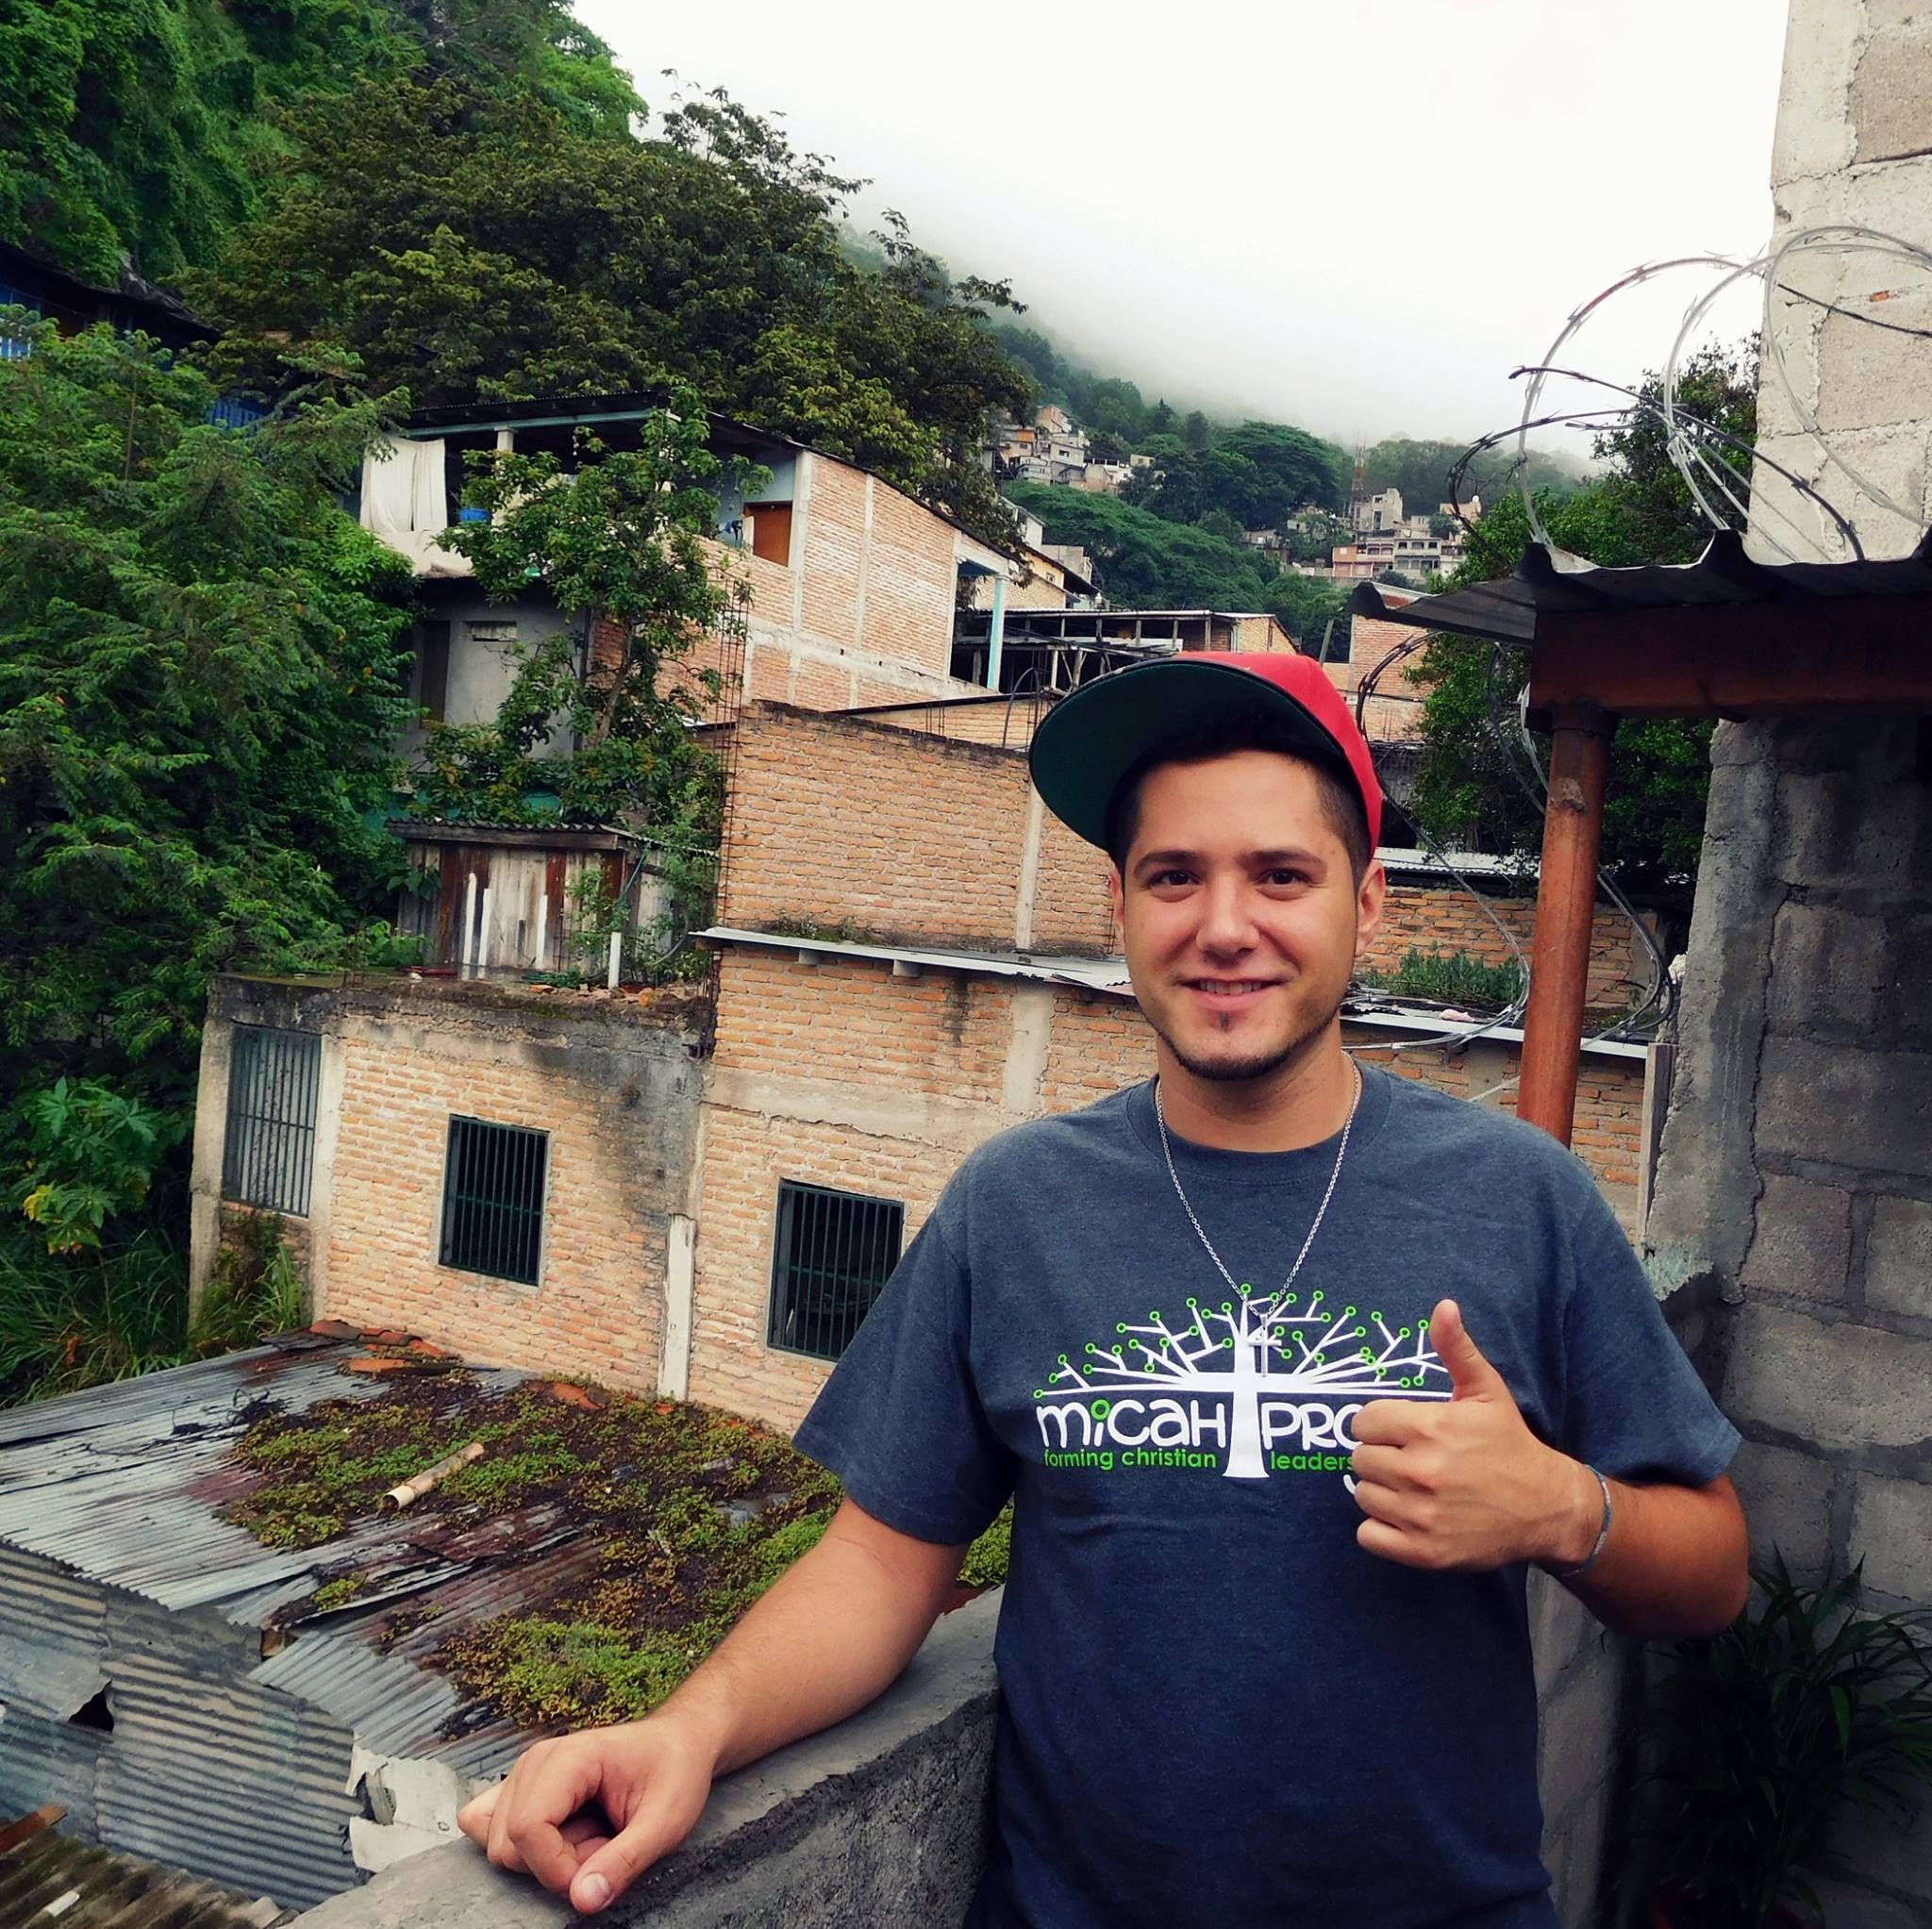 Stephen in Honduras